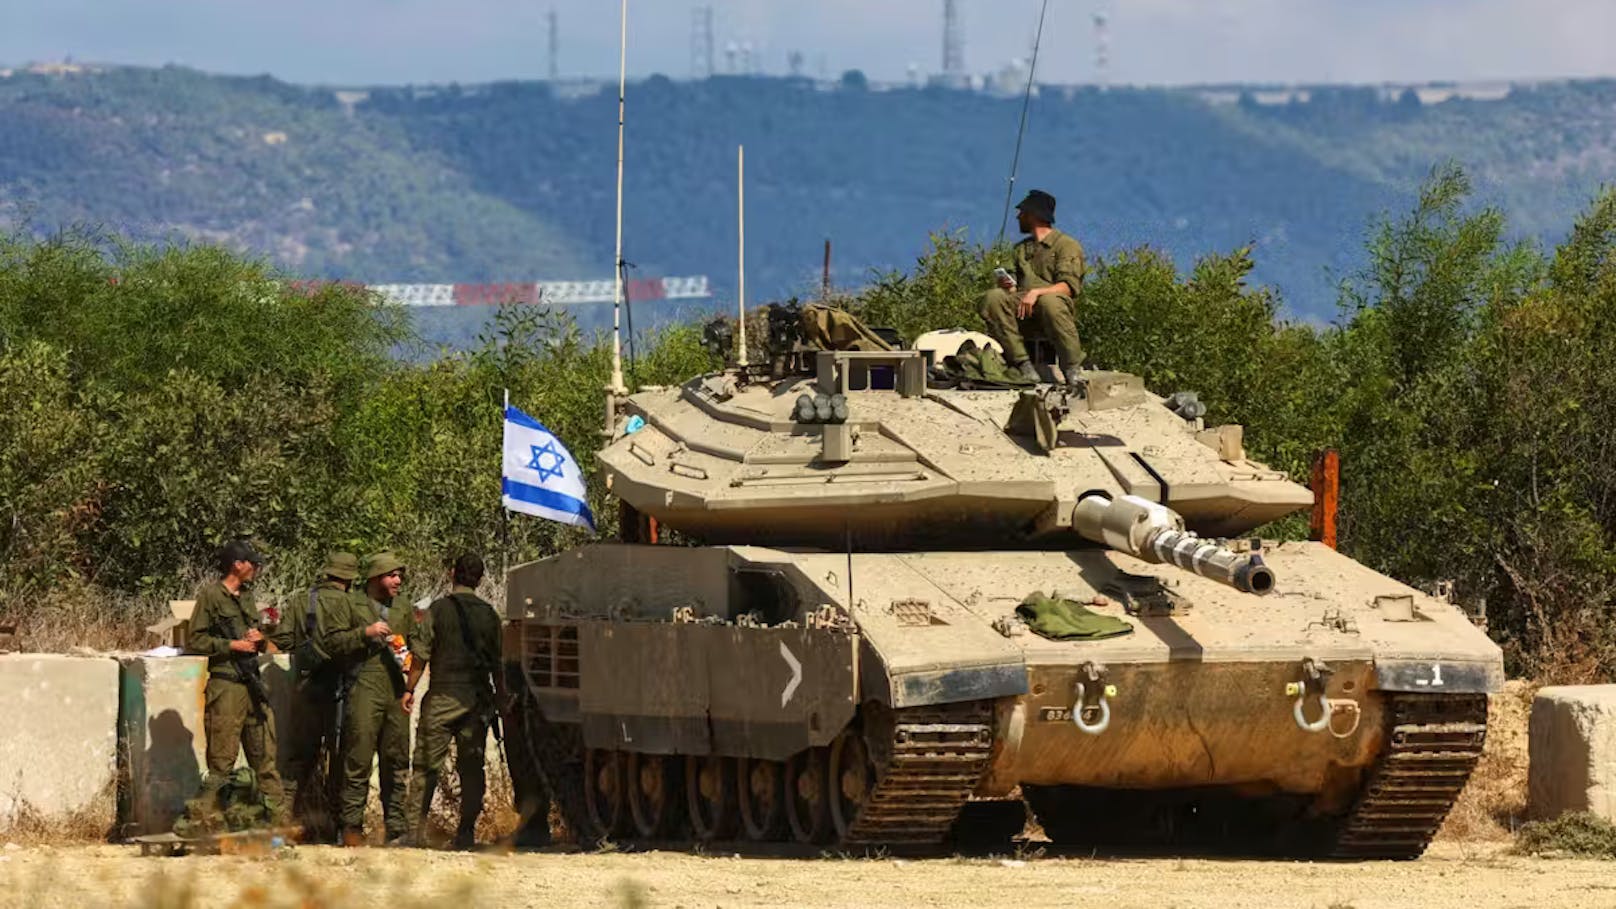 "Der Hisbollah gelingt es, Israel vorzuführen"